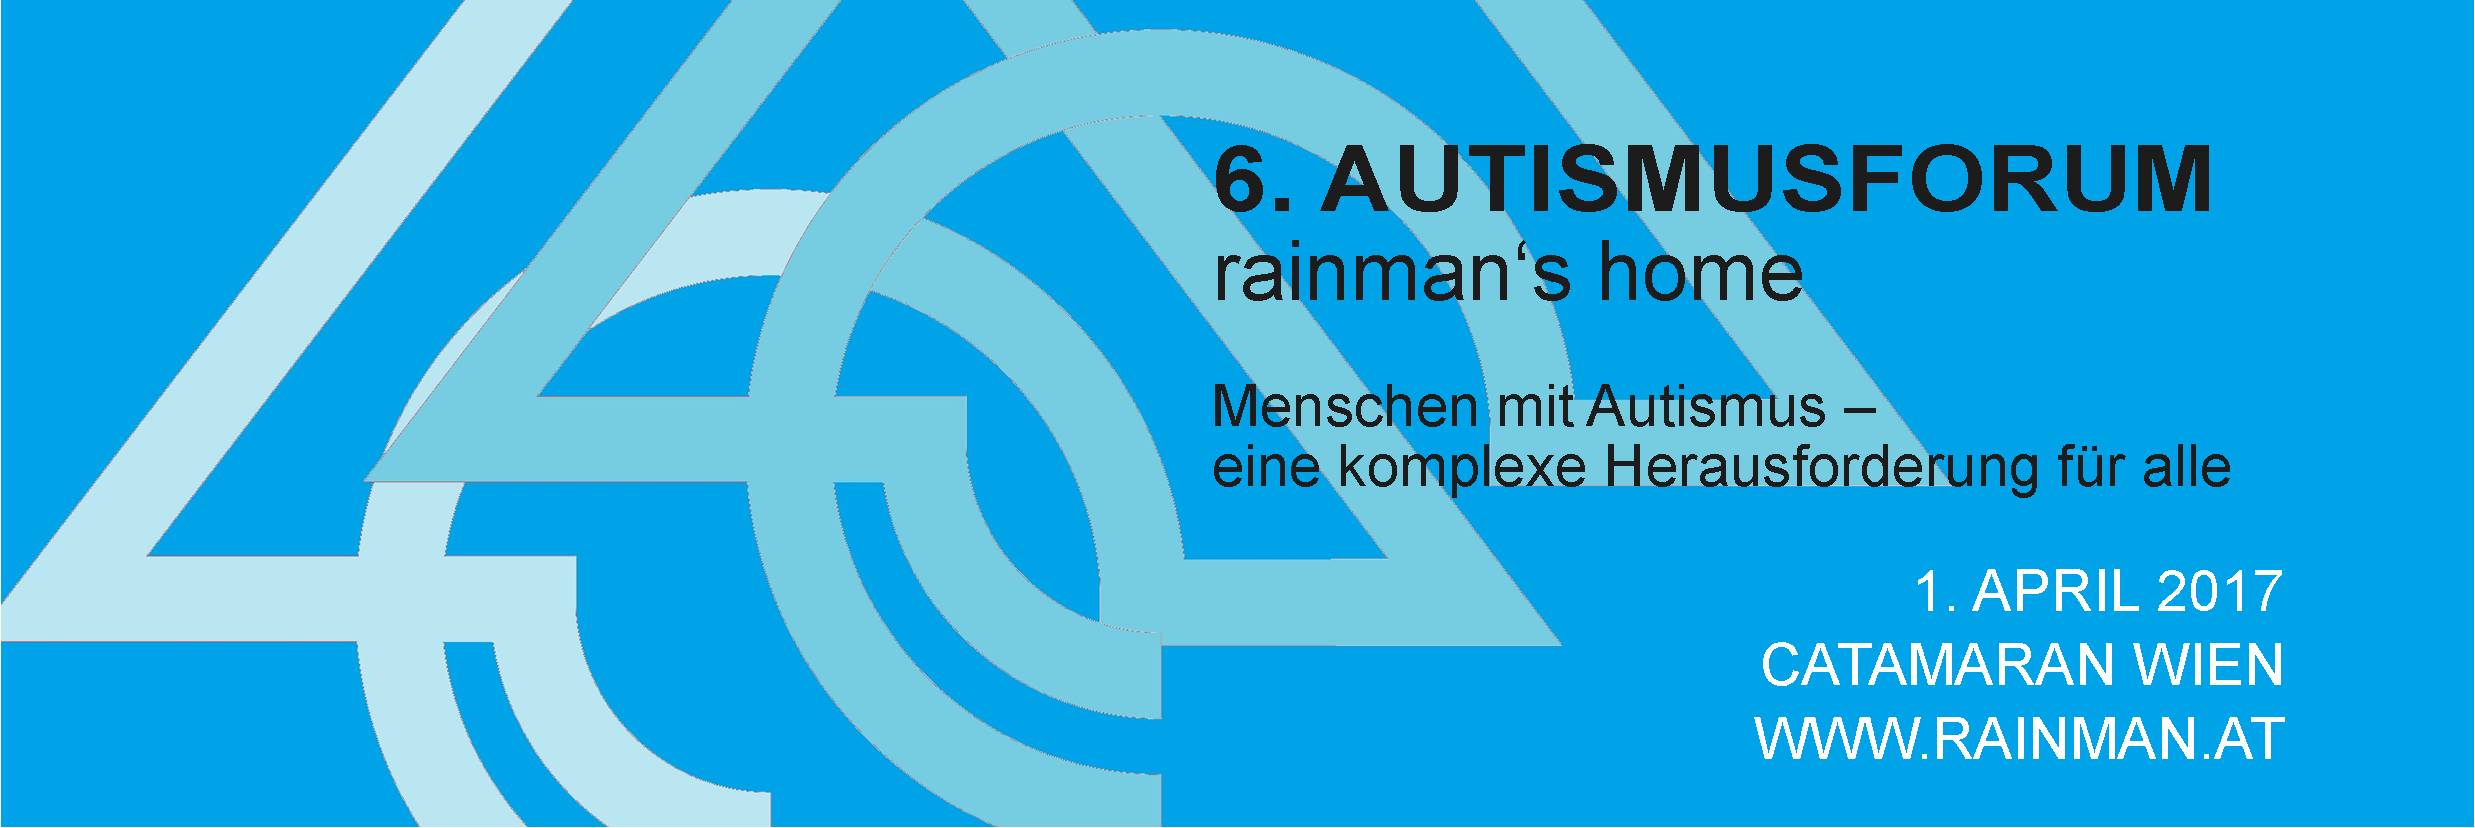 6. Autismusforum rainman's home